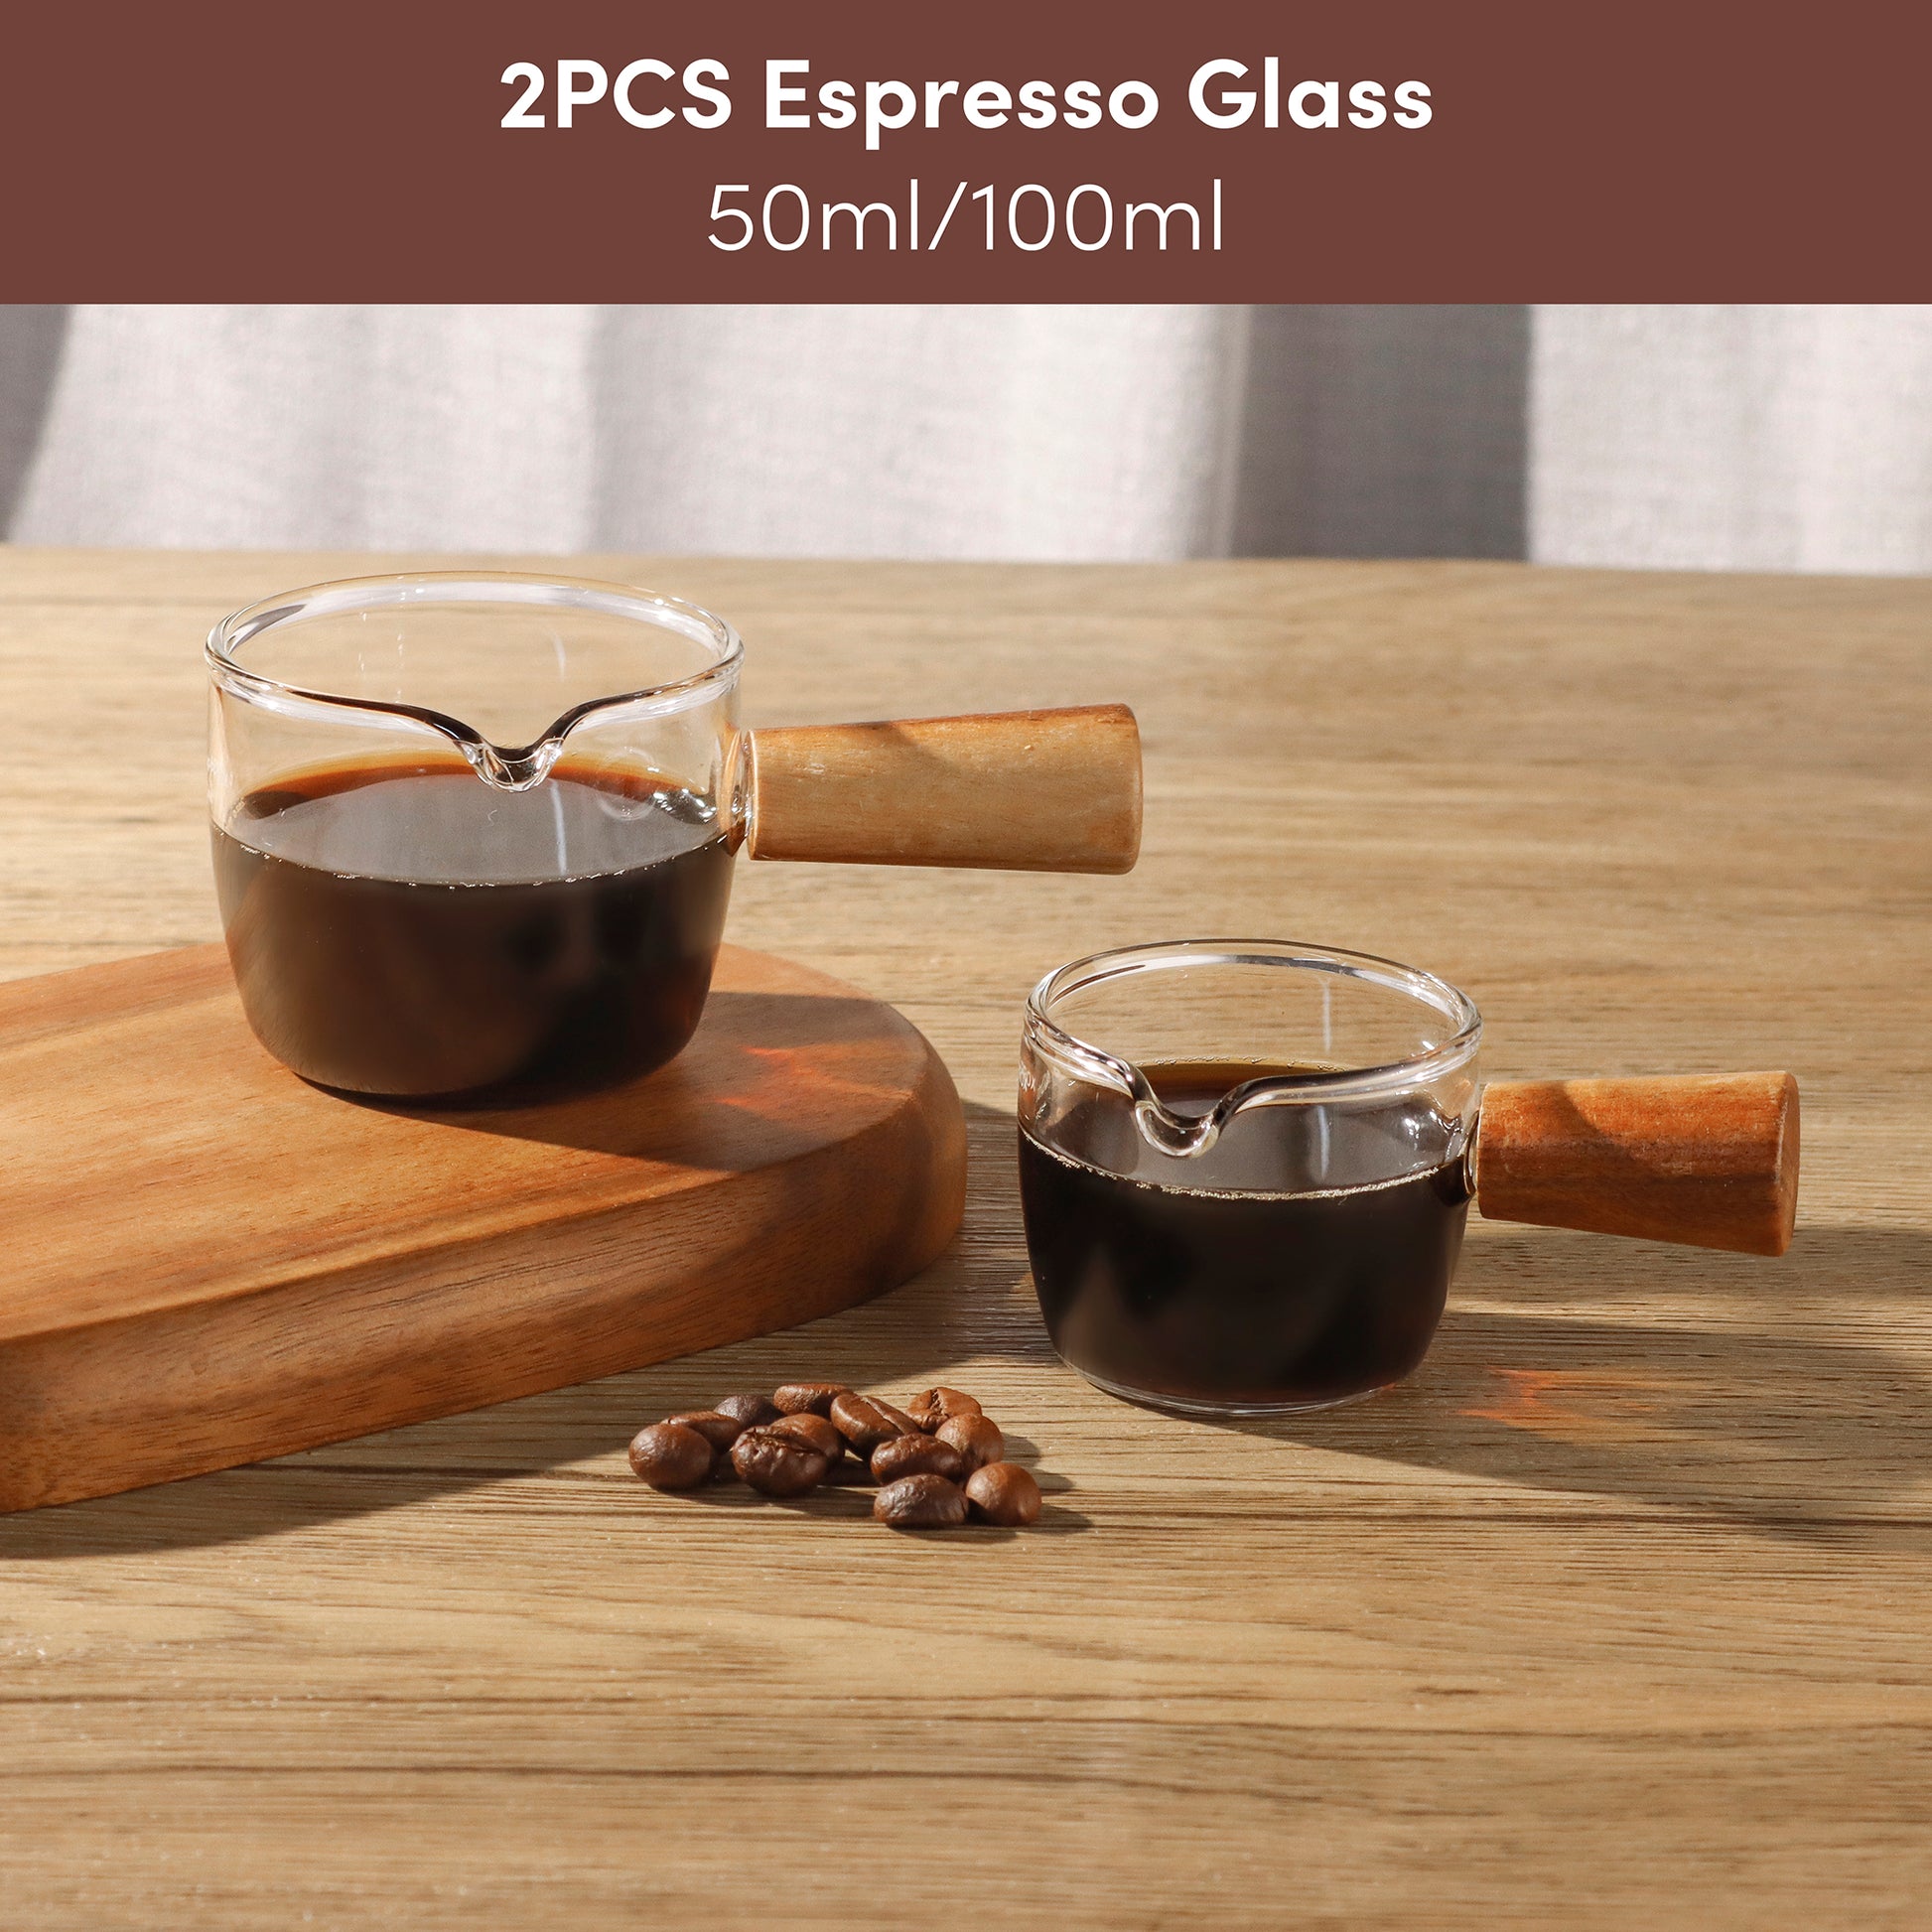 60/75ml Espresso Shot Glass Double Spouts Glass Measuring Cup Heat